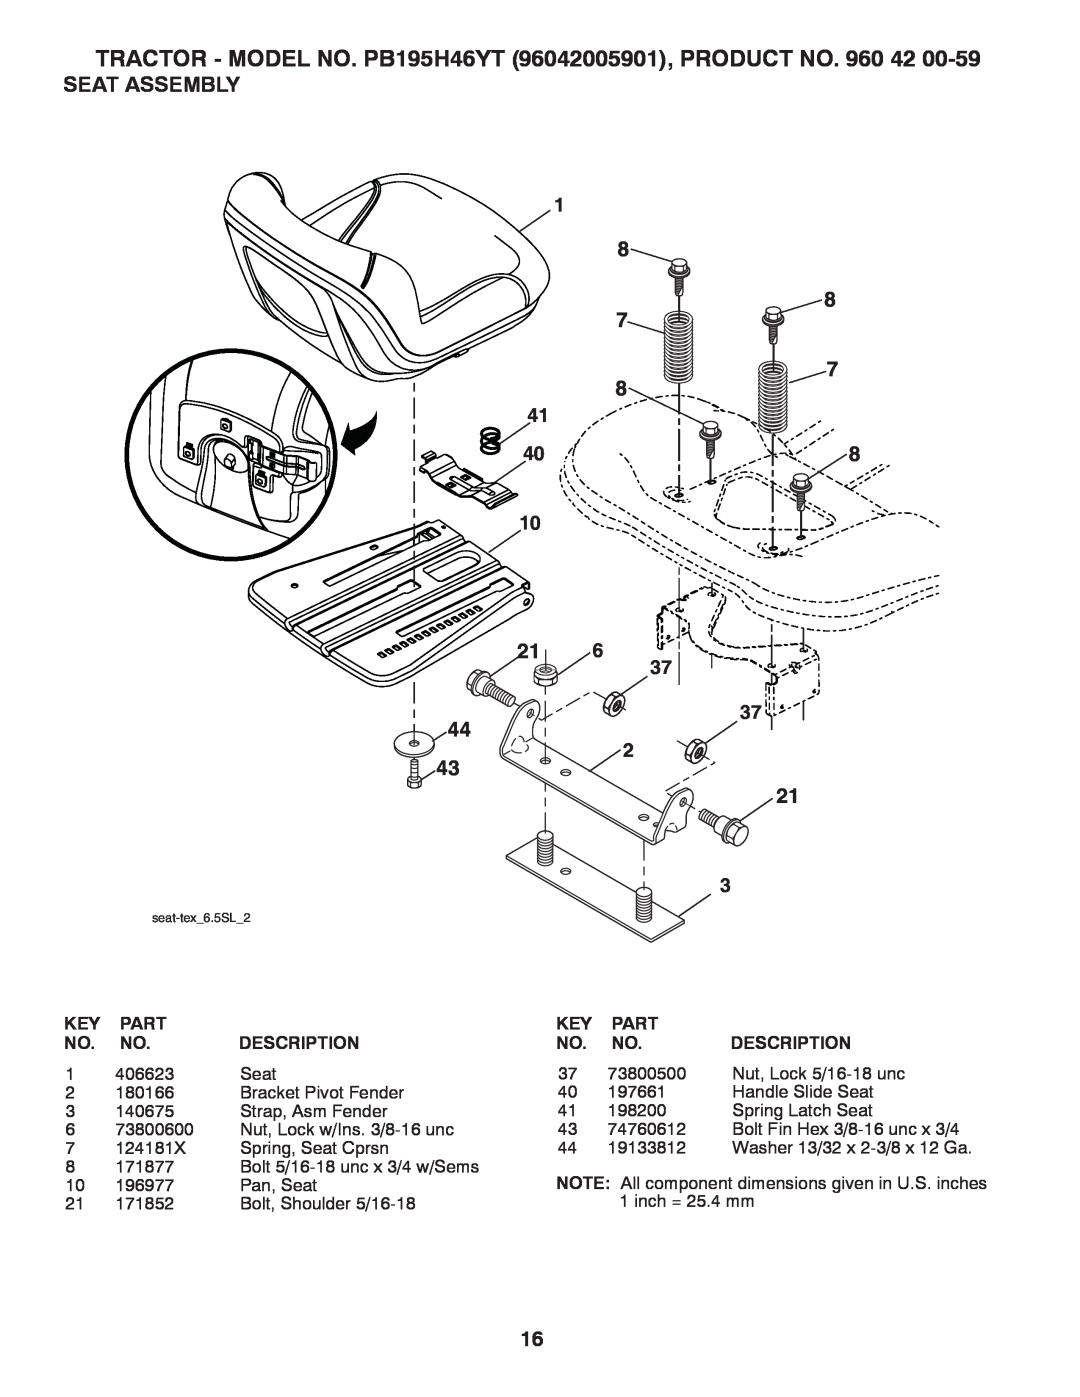 Poulan manual Seat Assembly, TRACTOR - MODEL NO. PB195H46YT 96042005901, PRODUCT NO, Part, Description 